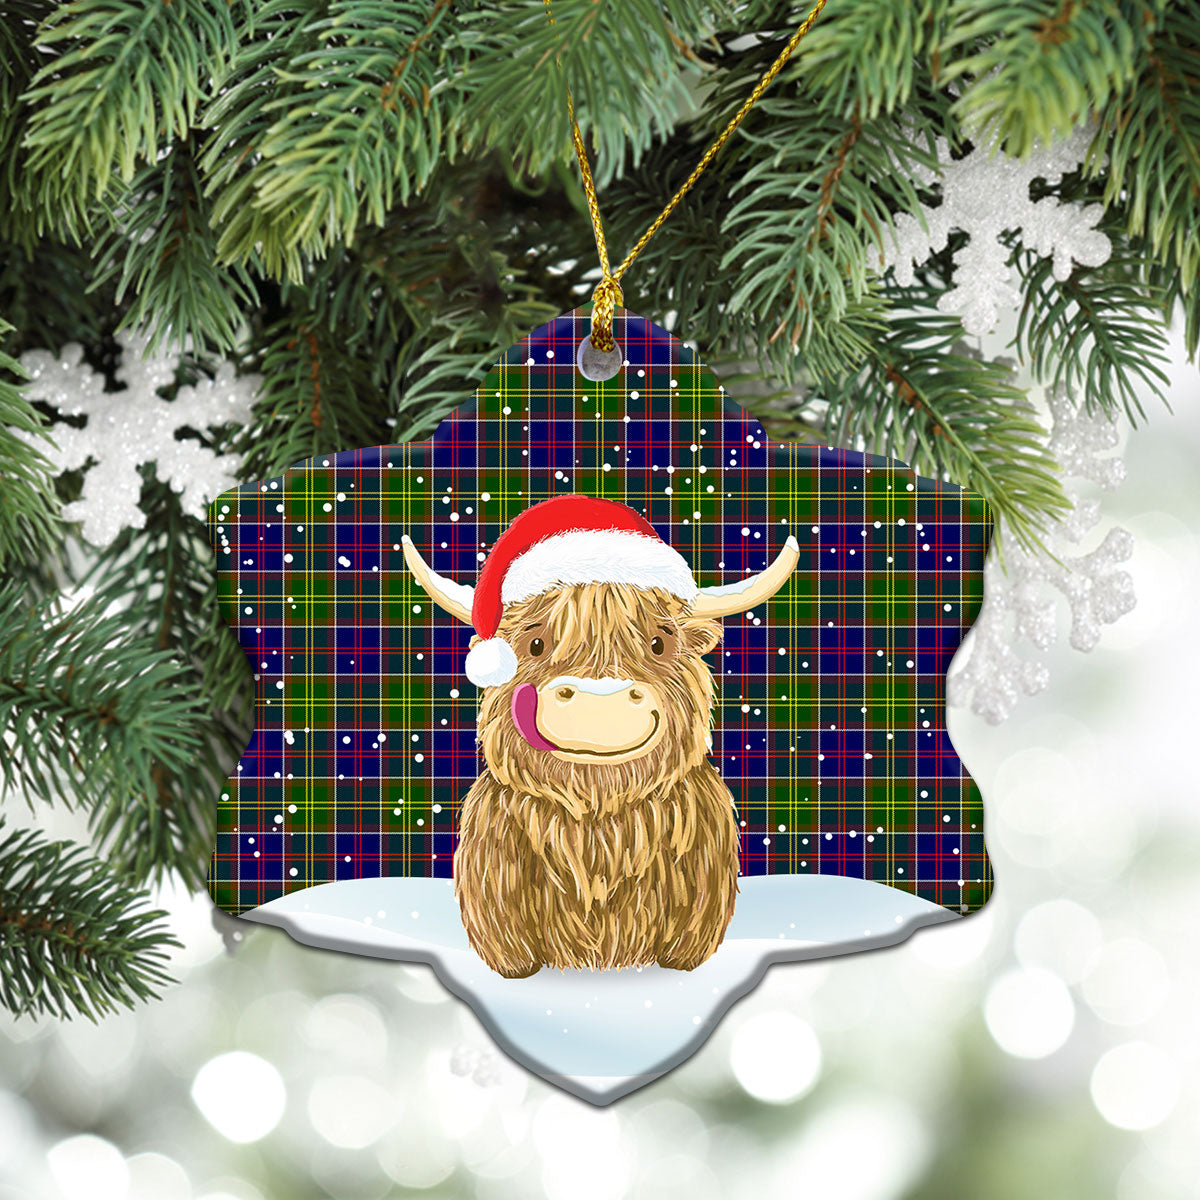 Whiteford Tartan Christmas Ceramic Ornament - Highland Cows Style